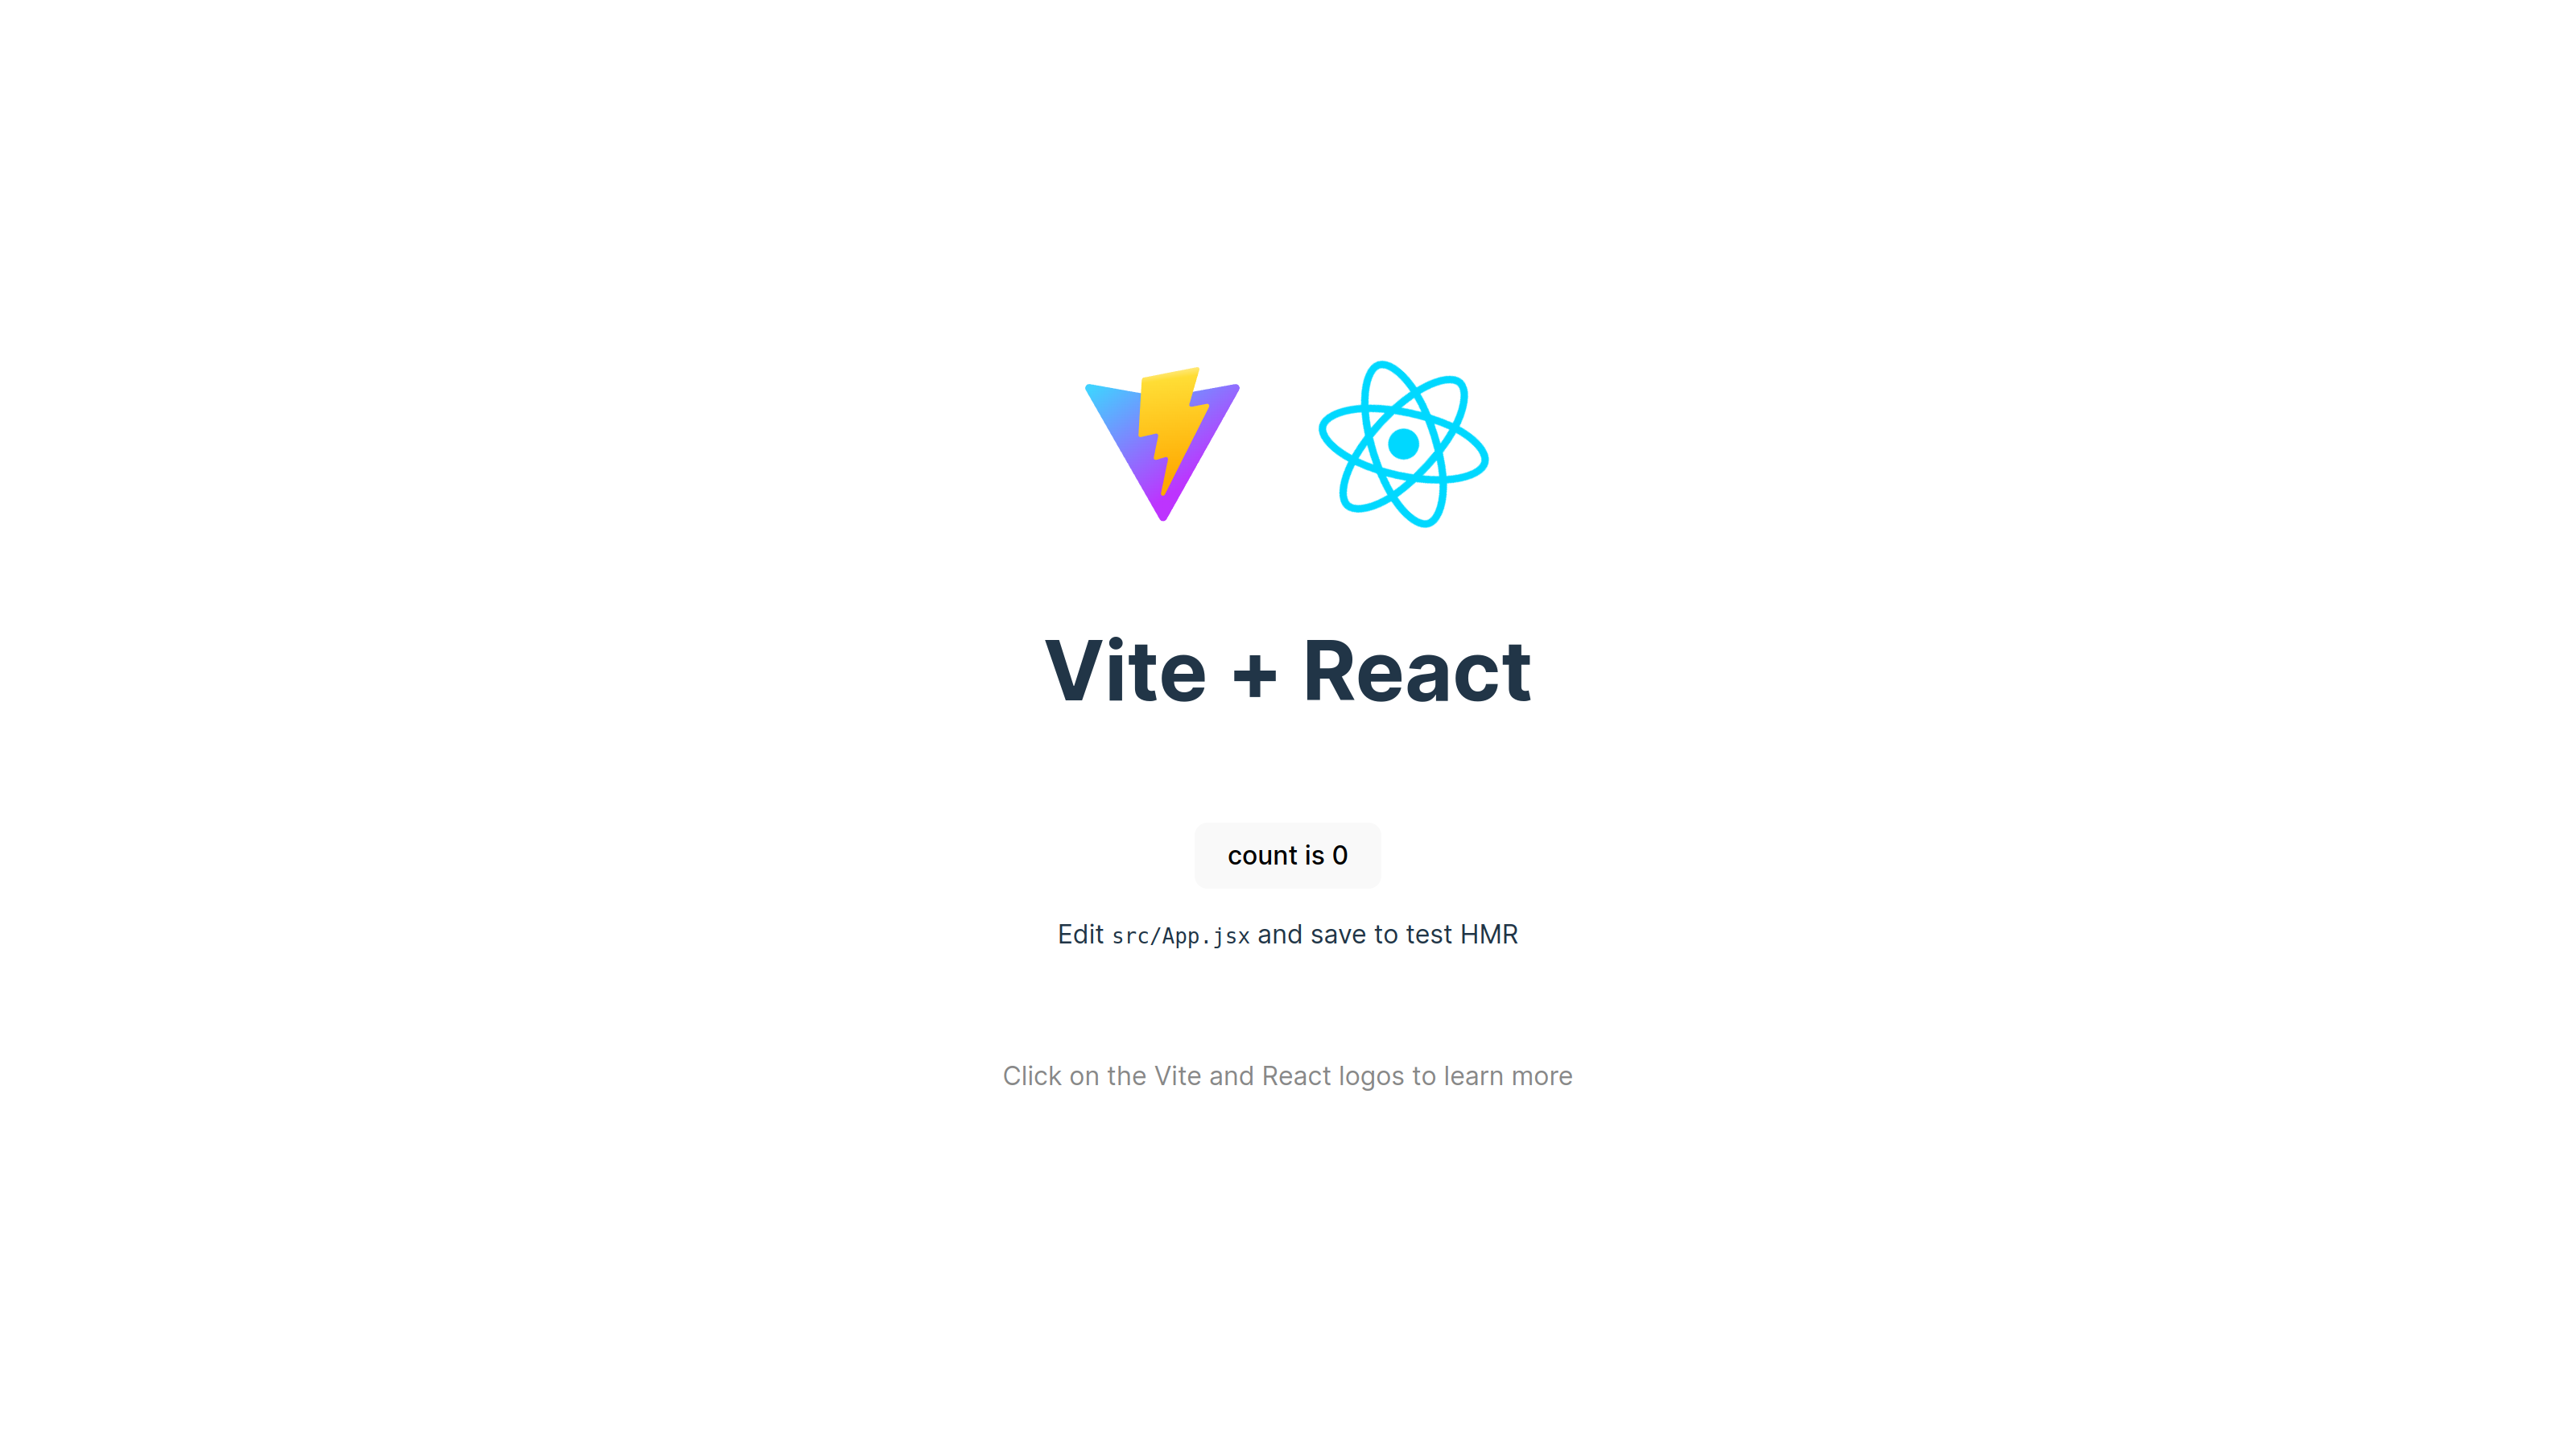 Vite + React app